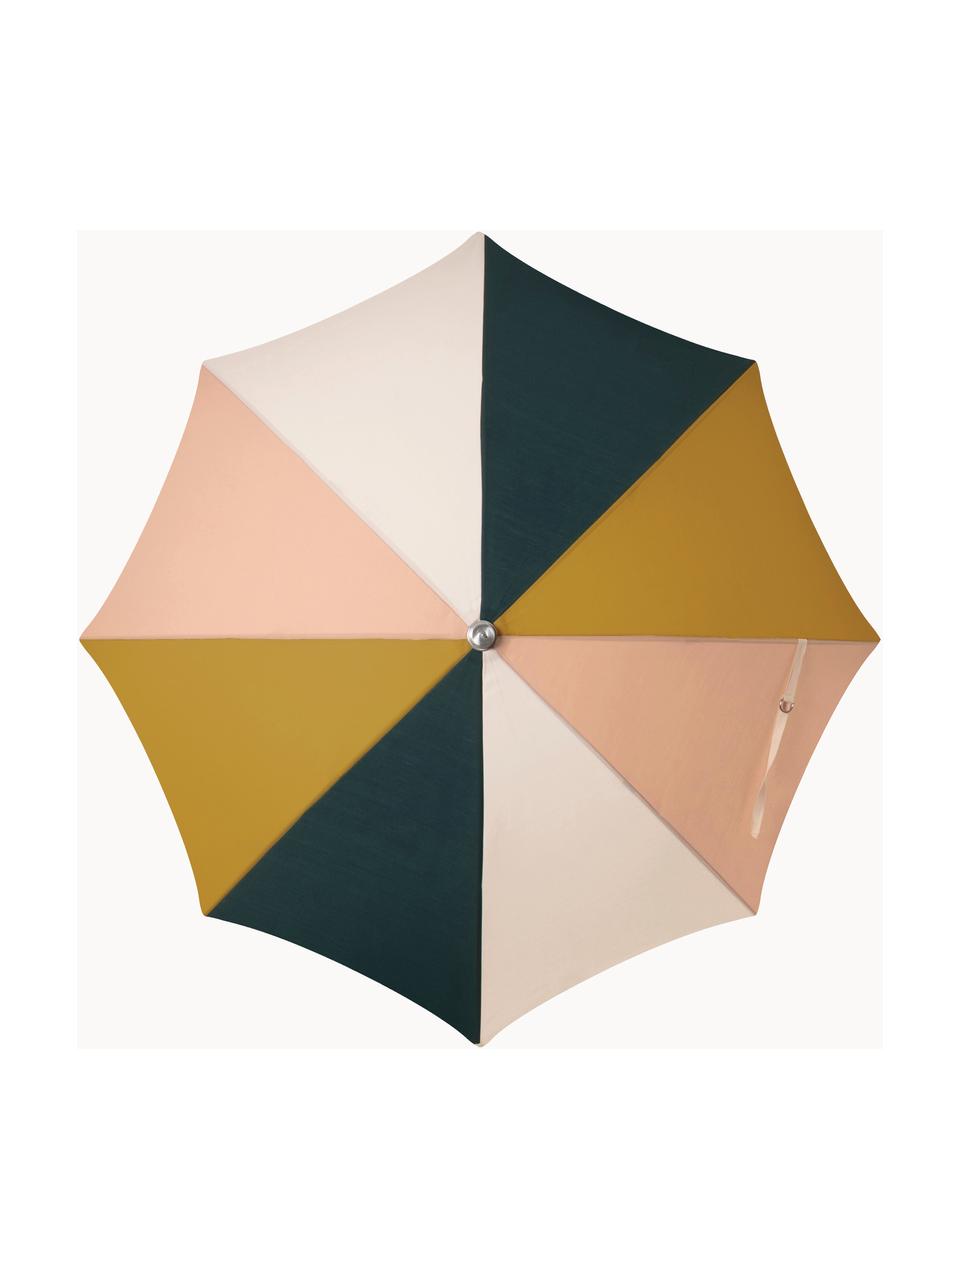 Buigbare parasol Retro met franjes, Ø 180 cm, Frame: gelamineerd hout, Franjes: katoen, Oker, lichtroze, zwart, crèmewit, Ø 180 x H 230 cm